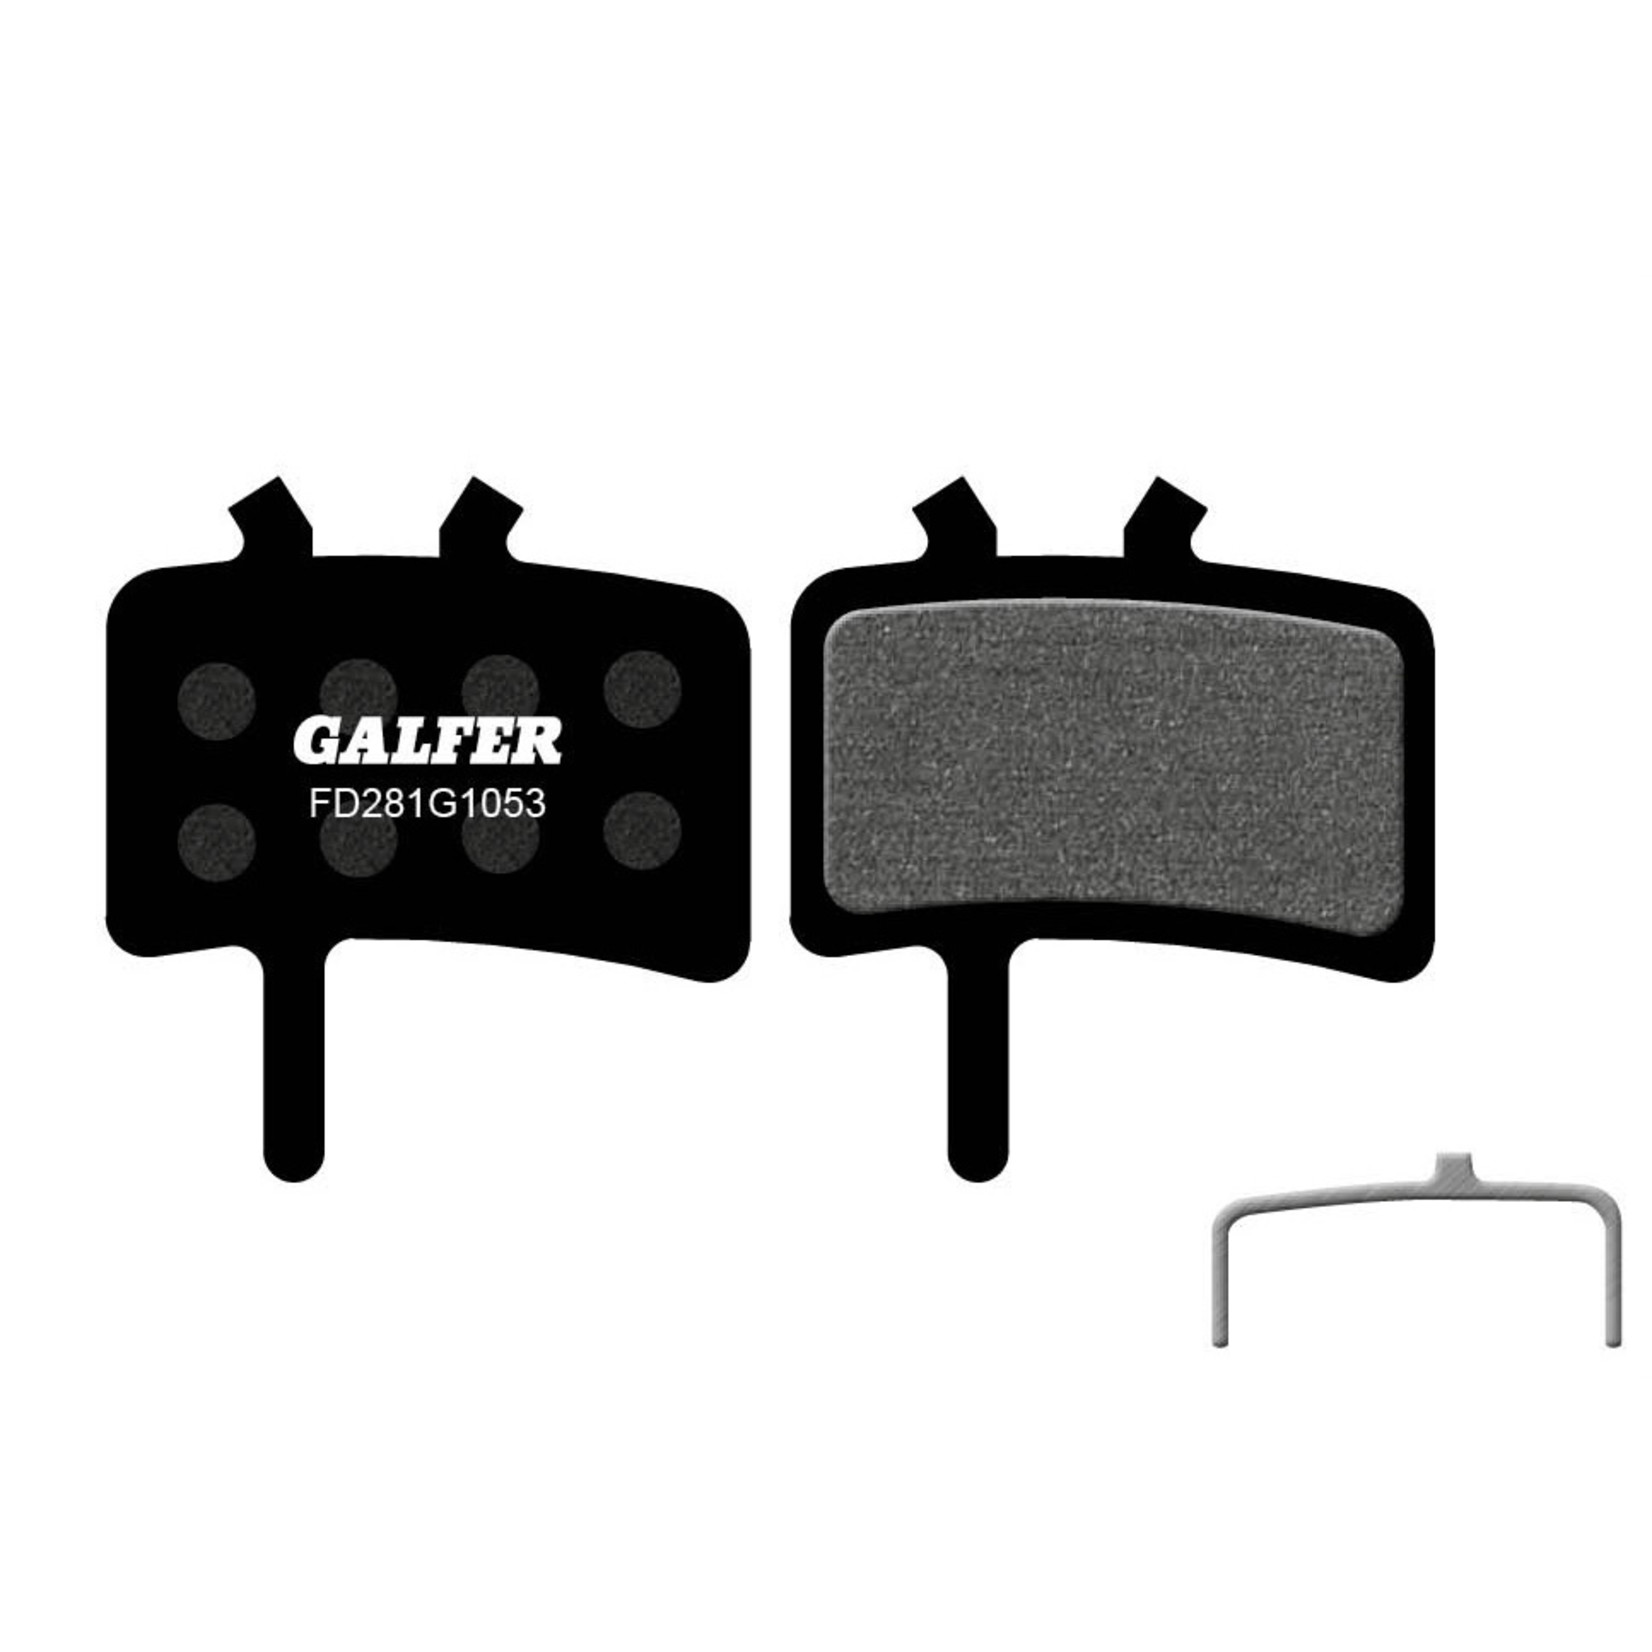 Galfer Bike Galfer, Disc Brake Pad Standard G1053 Avid Juicy